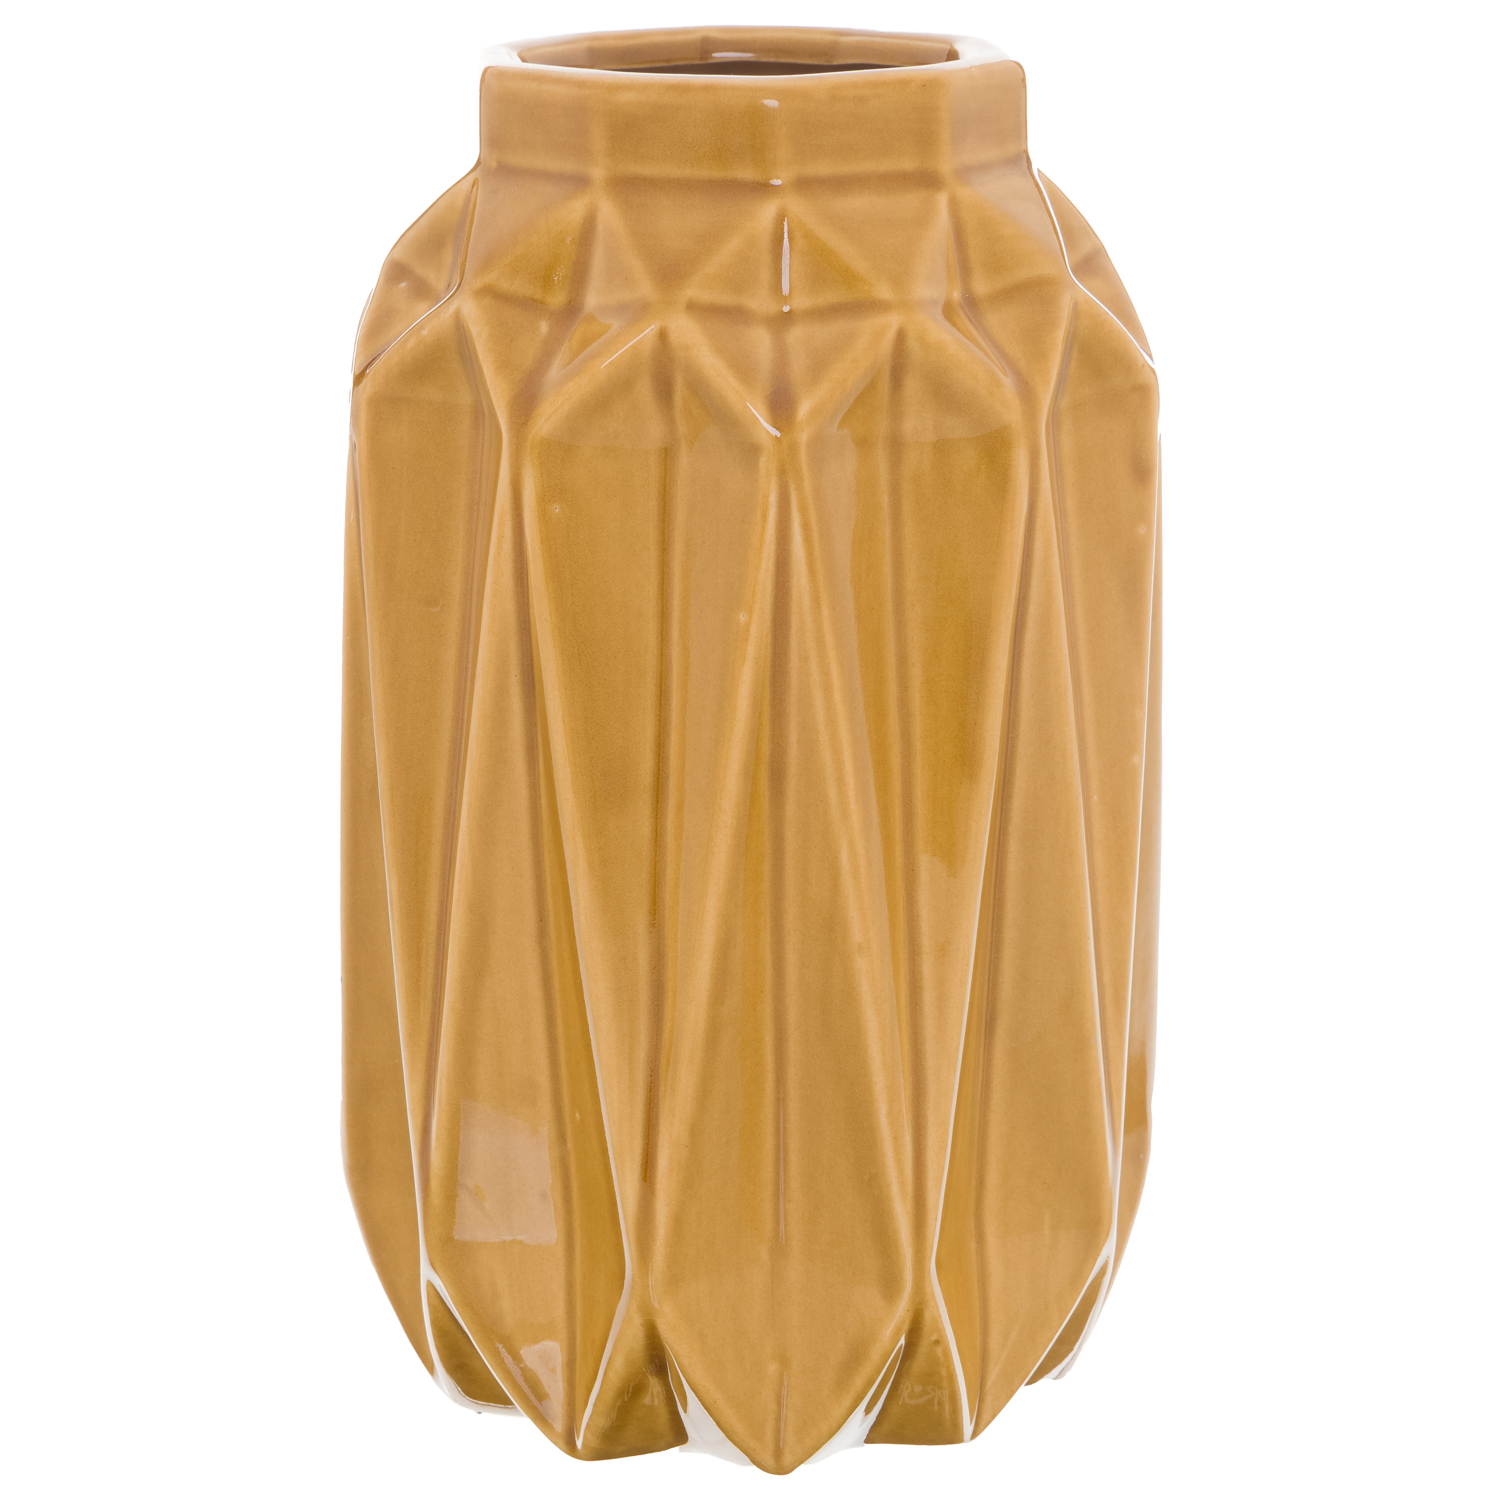 Seville Collection Ochre Vase - Image 1